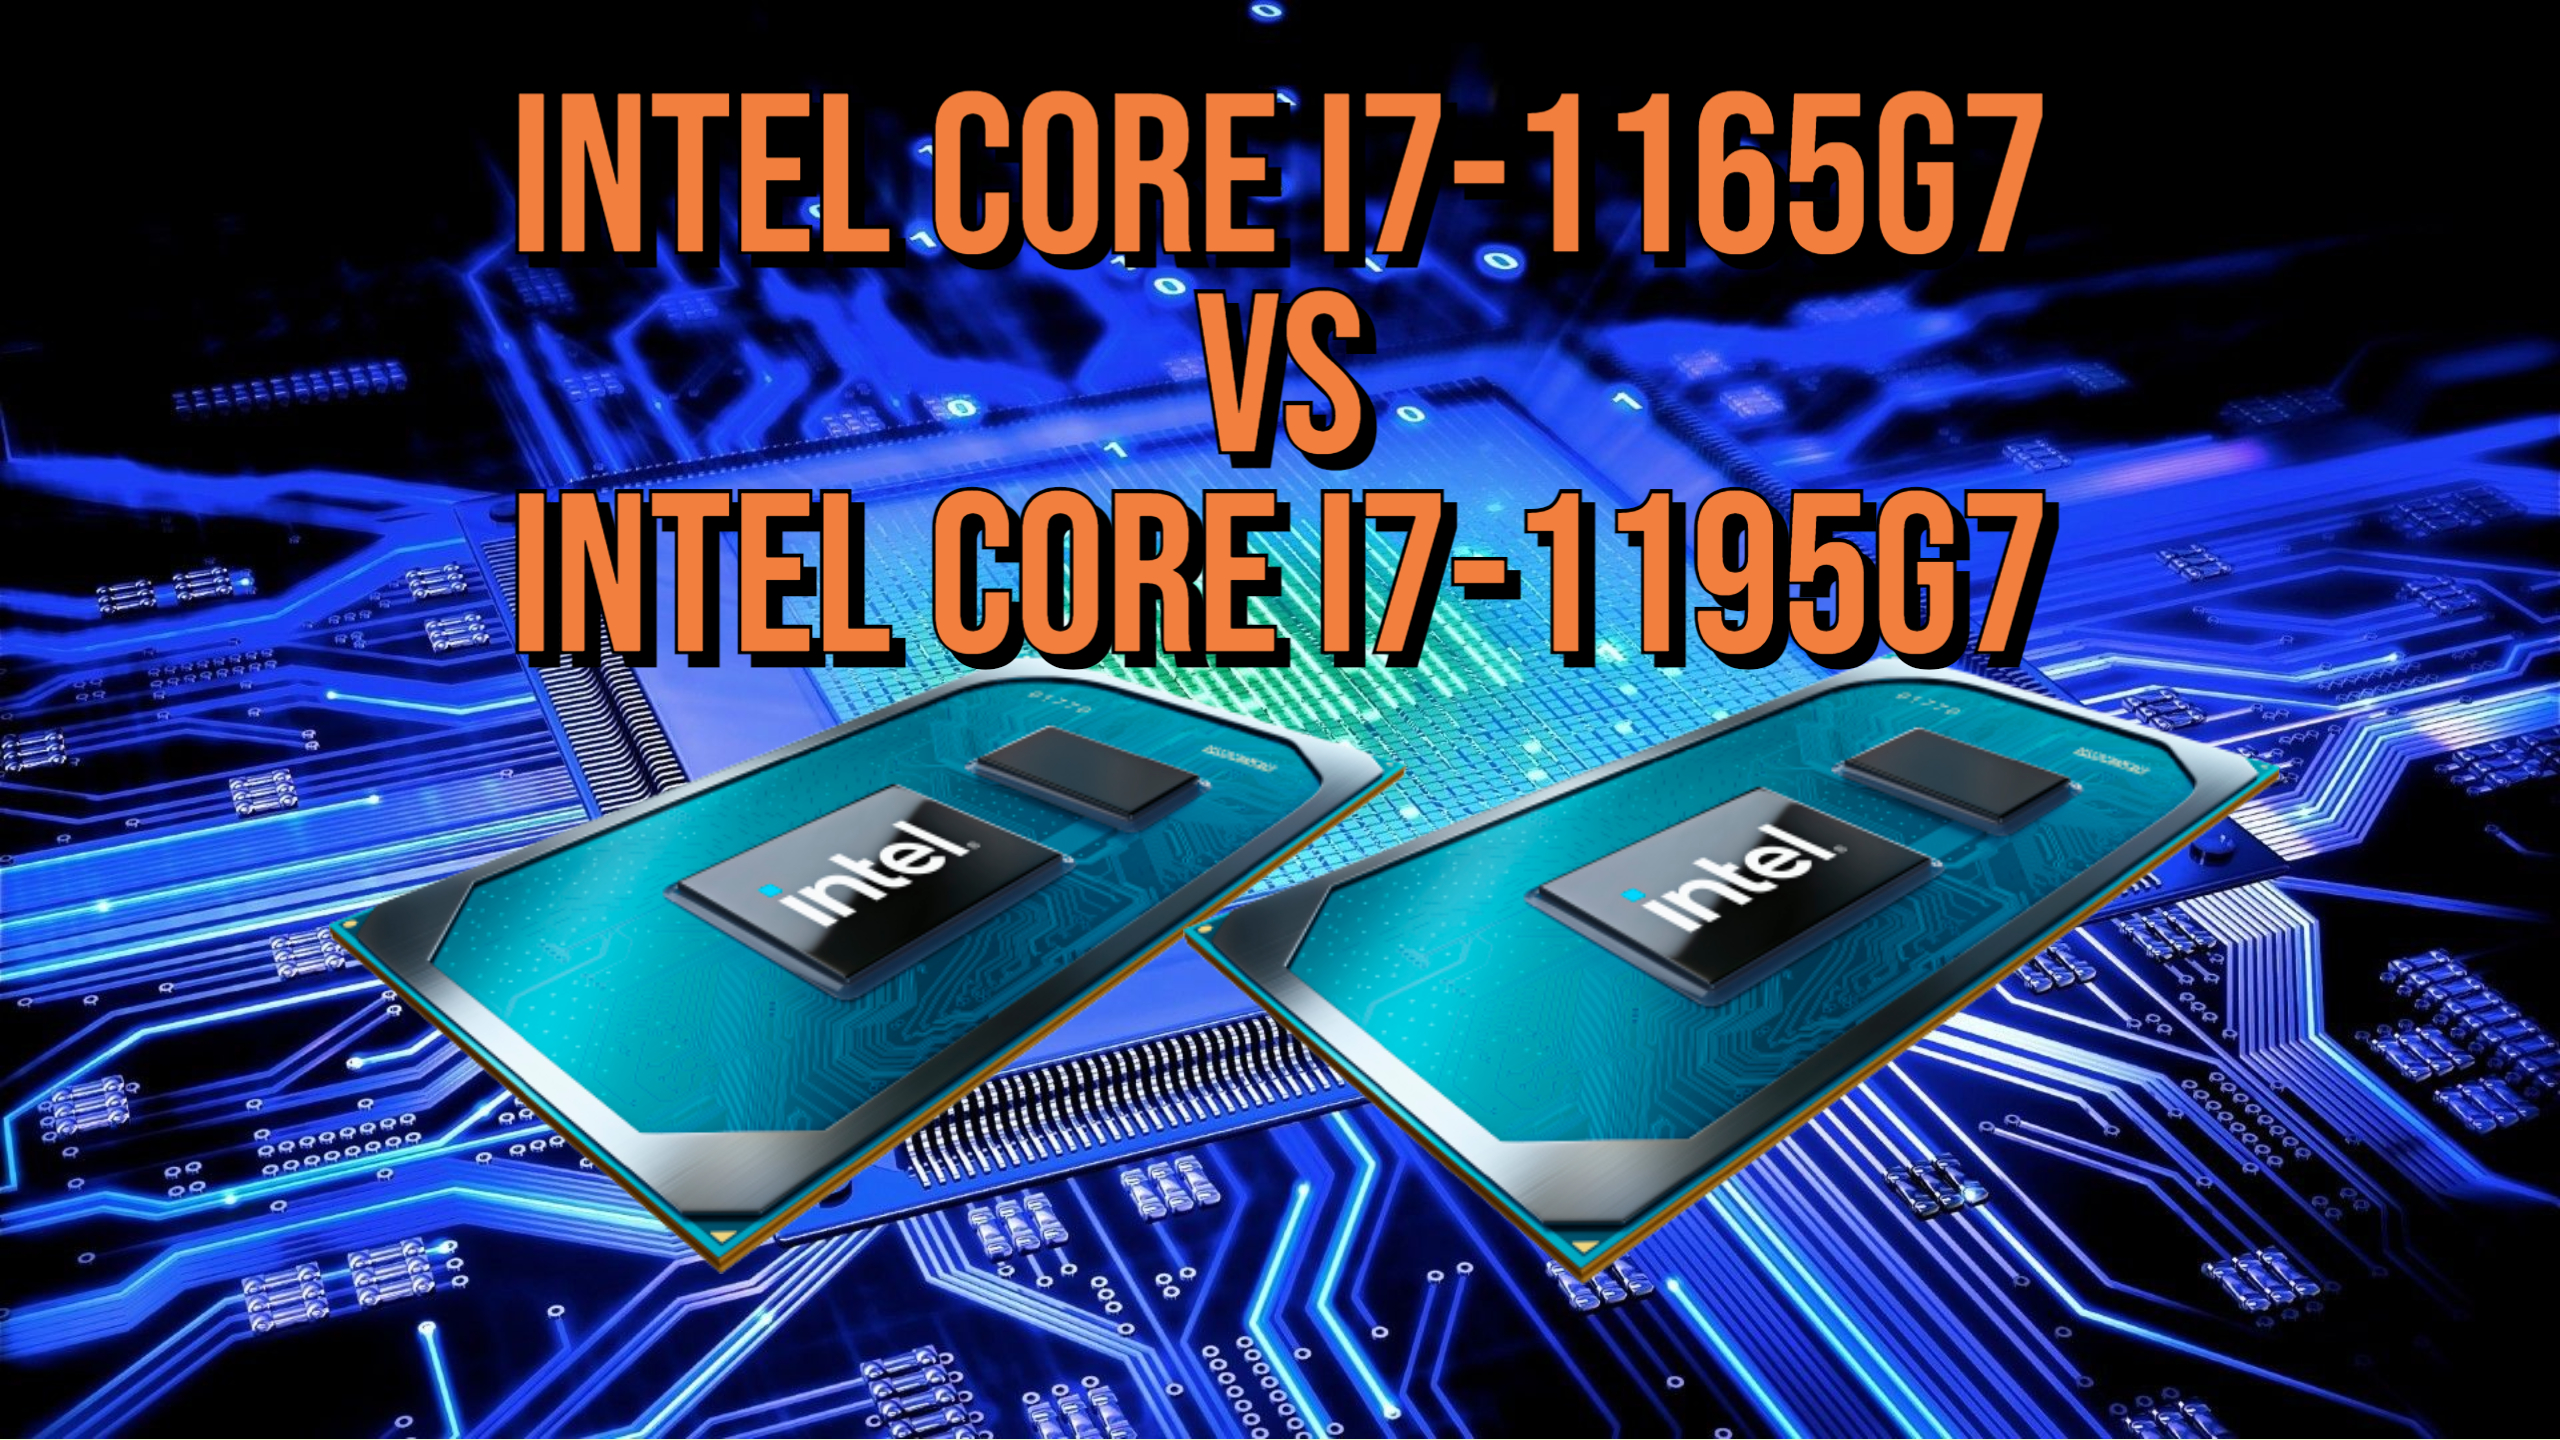 Intel Core i7-1165G7 vs Intel Core i7-1195G7